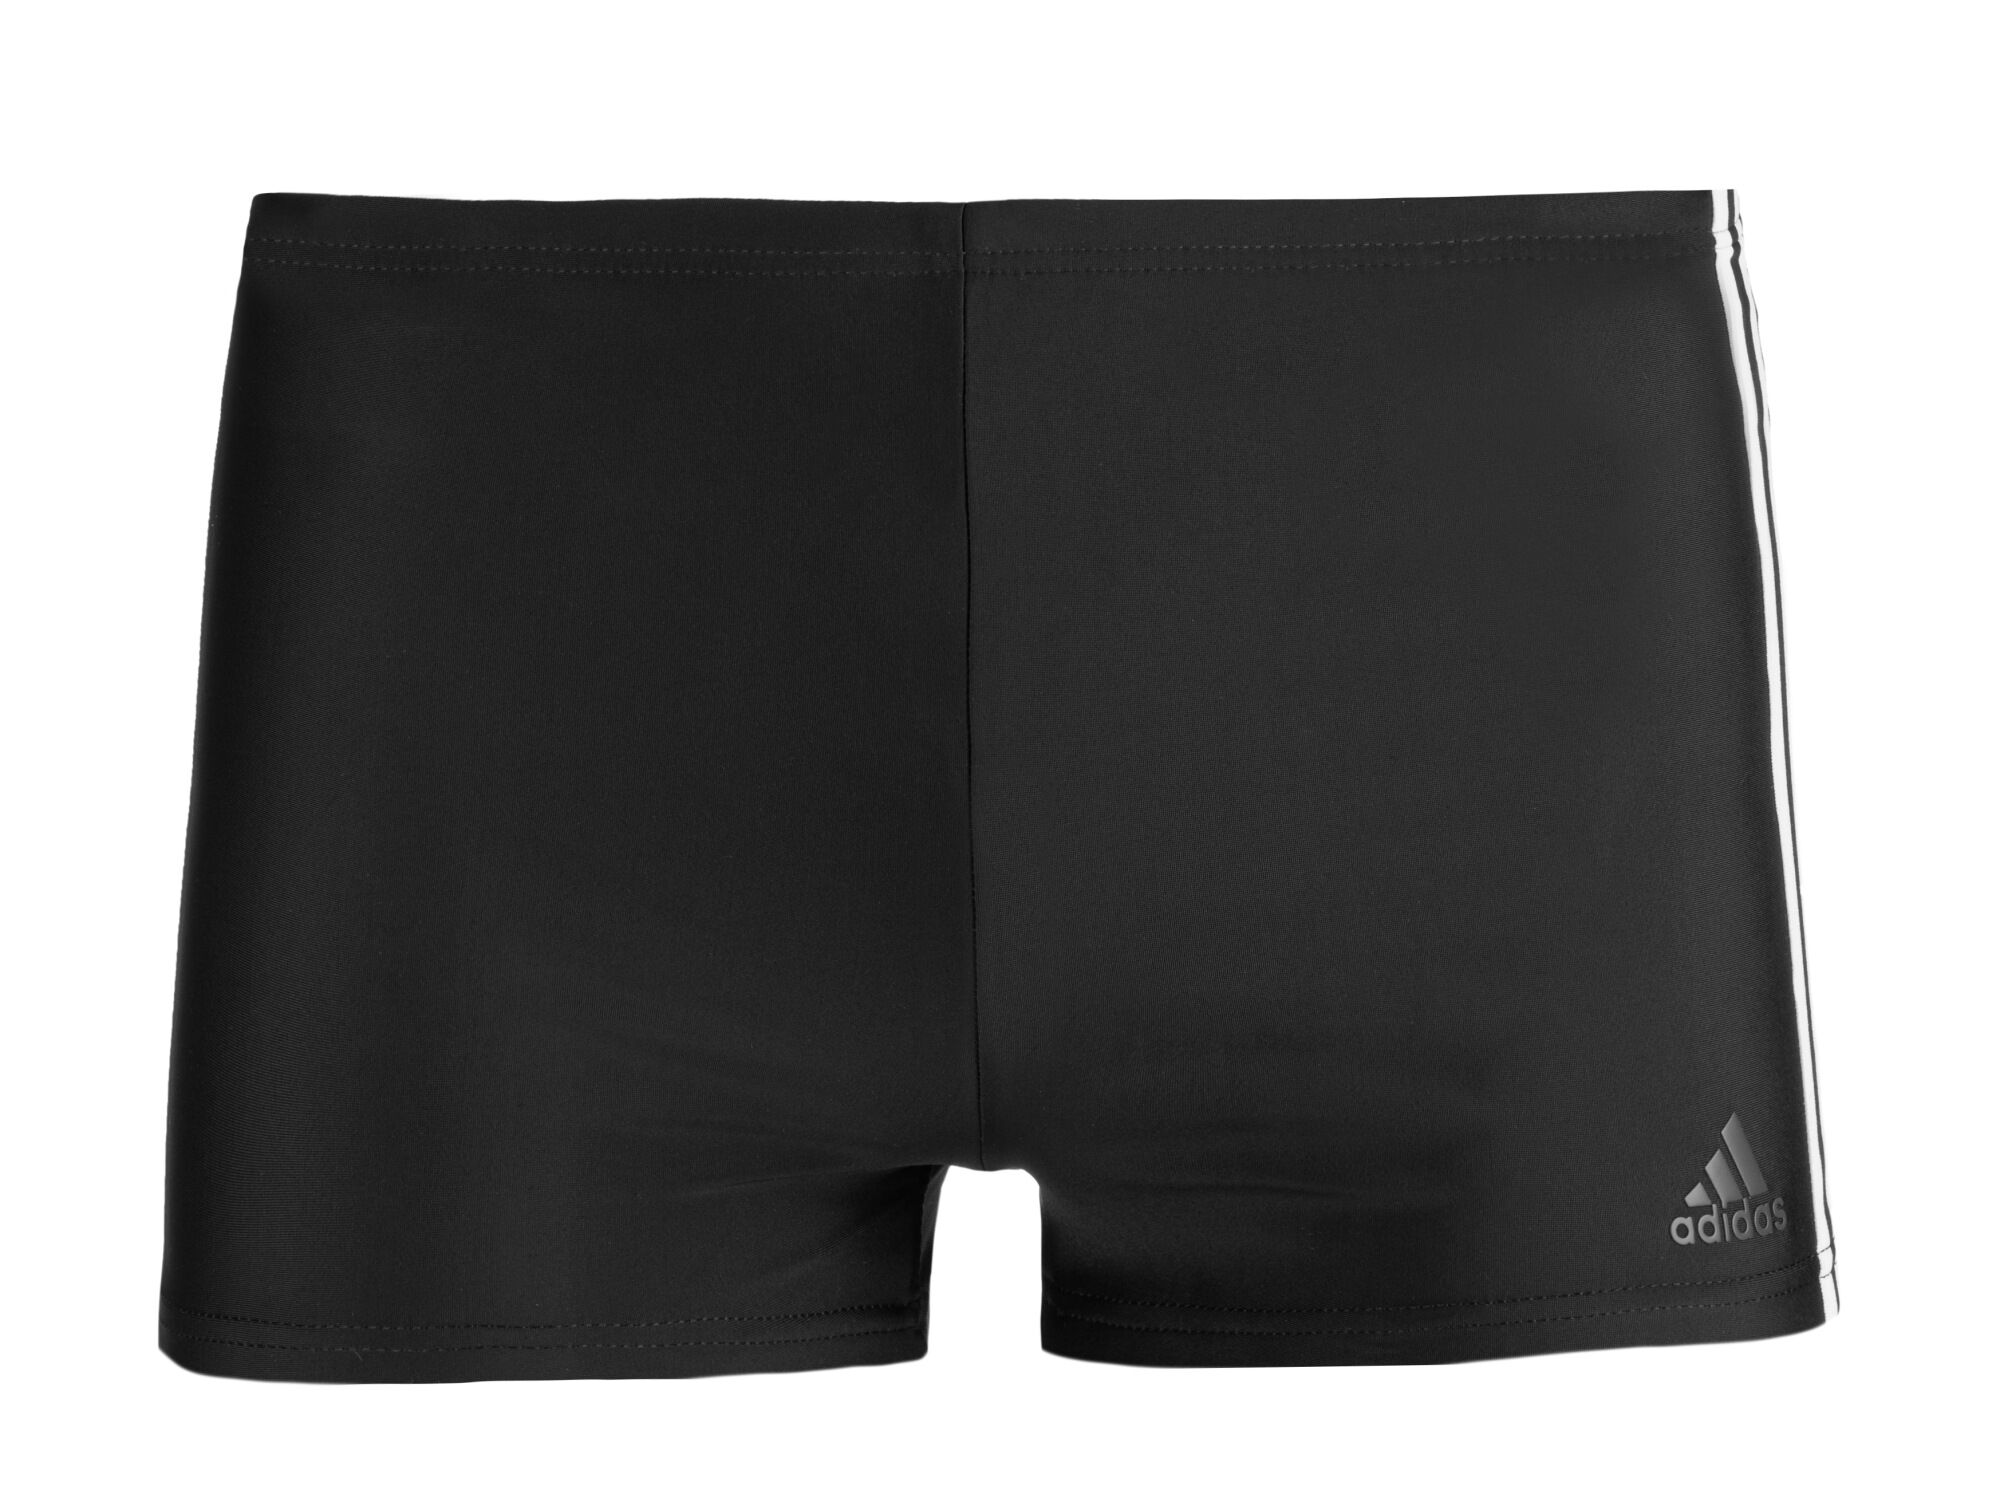 Adidas Fitness 3-Stripes miesten uimahousut